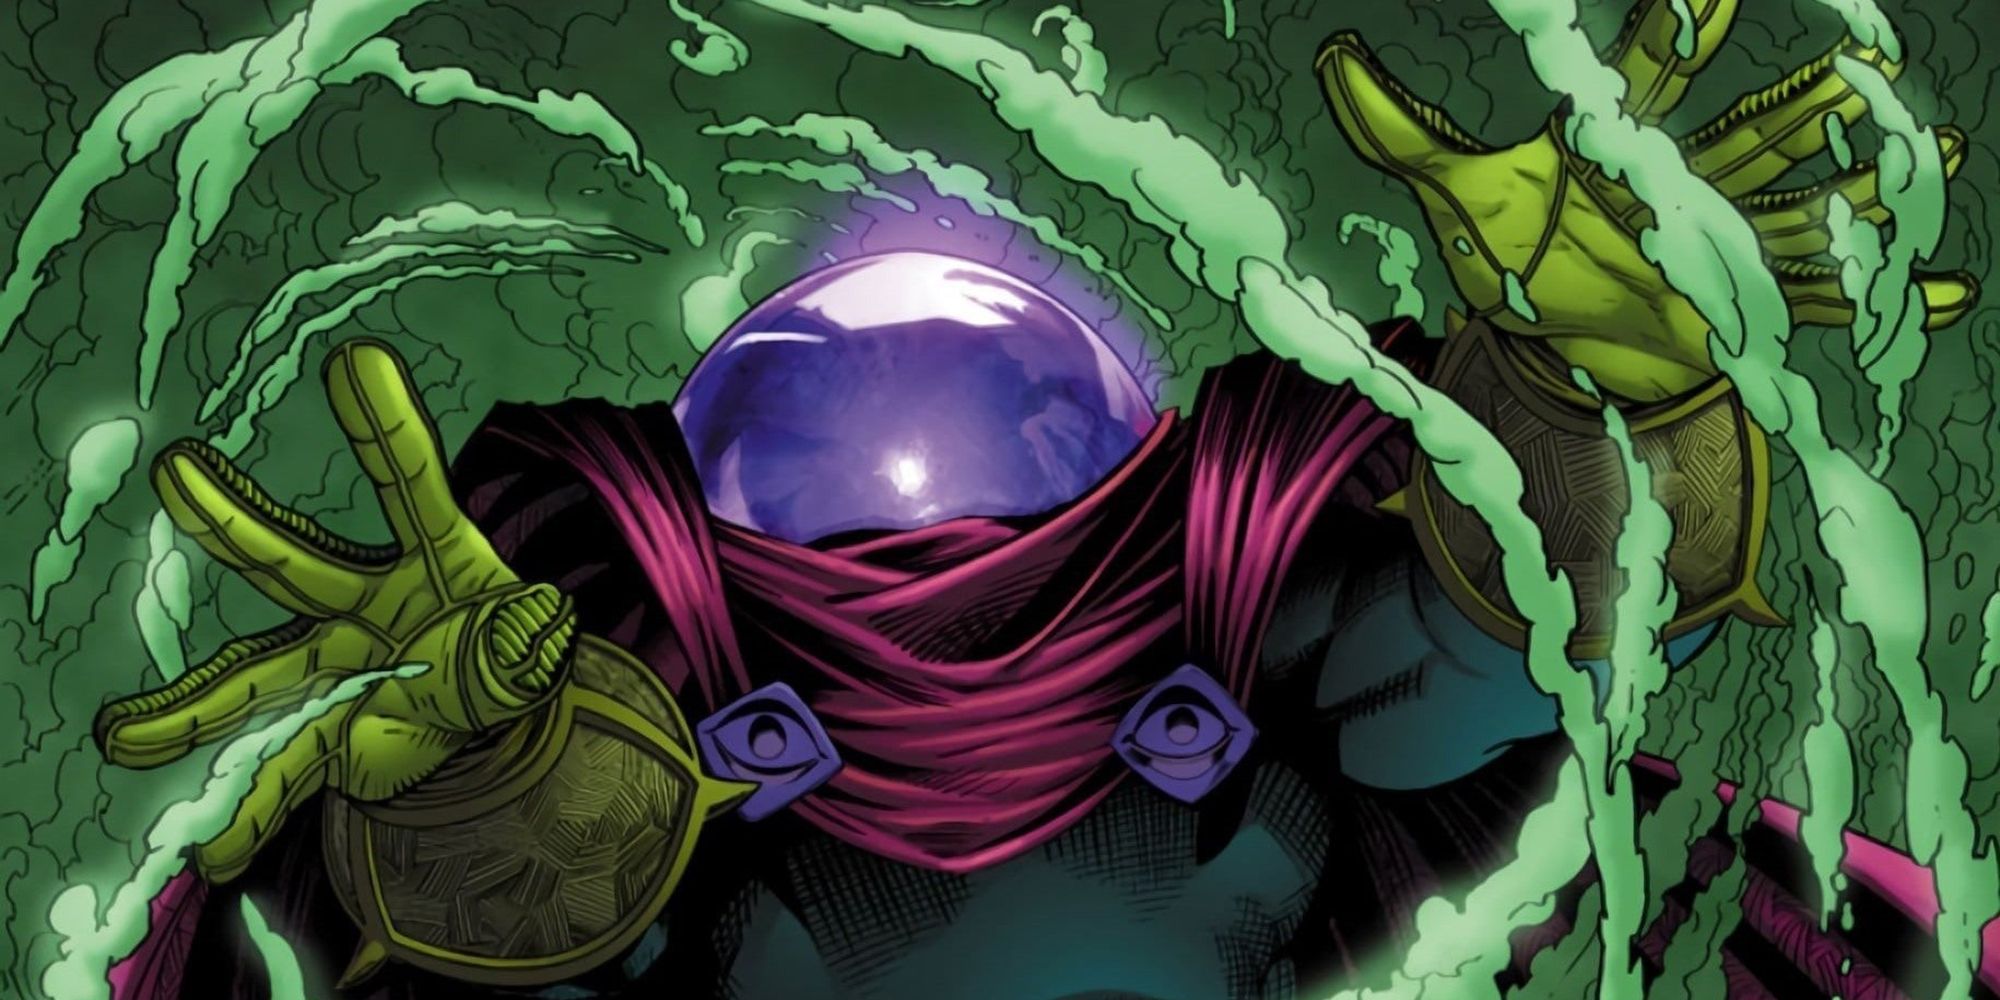 Mysterio casting an illusion.